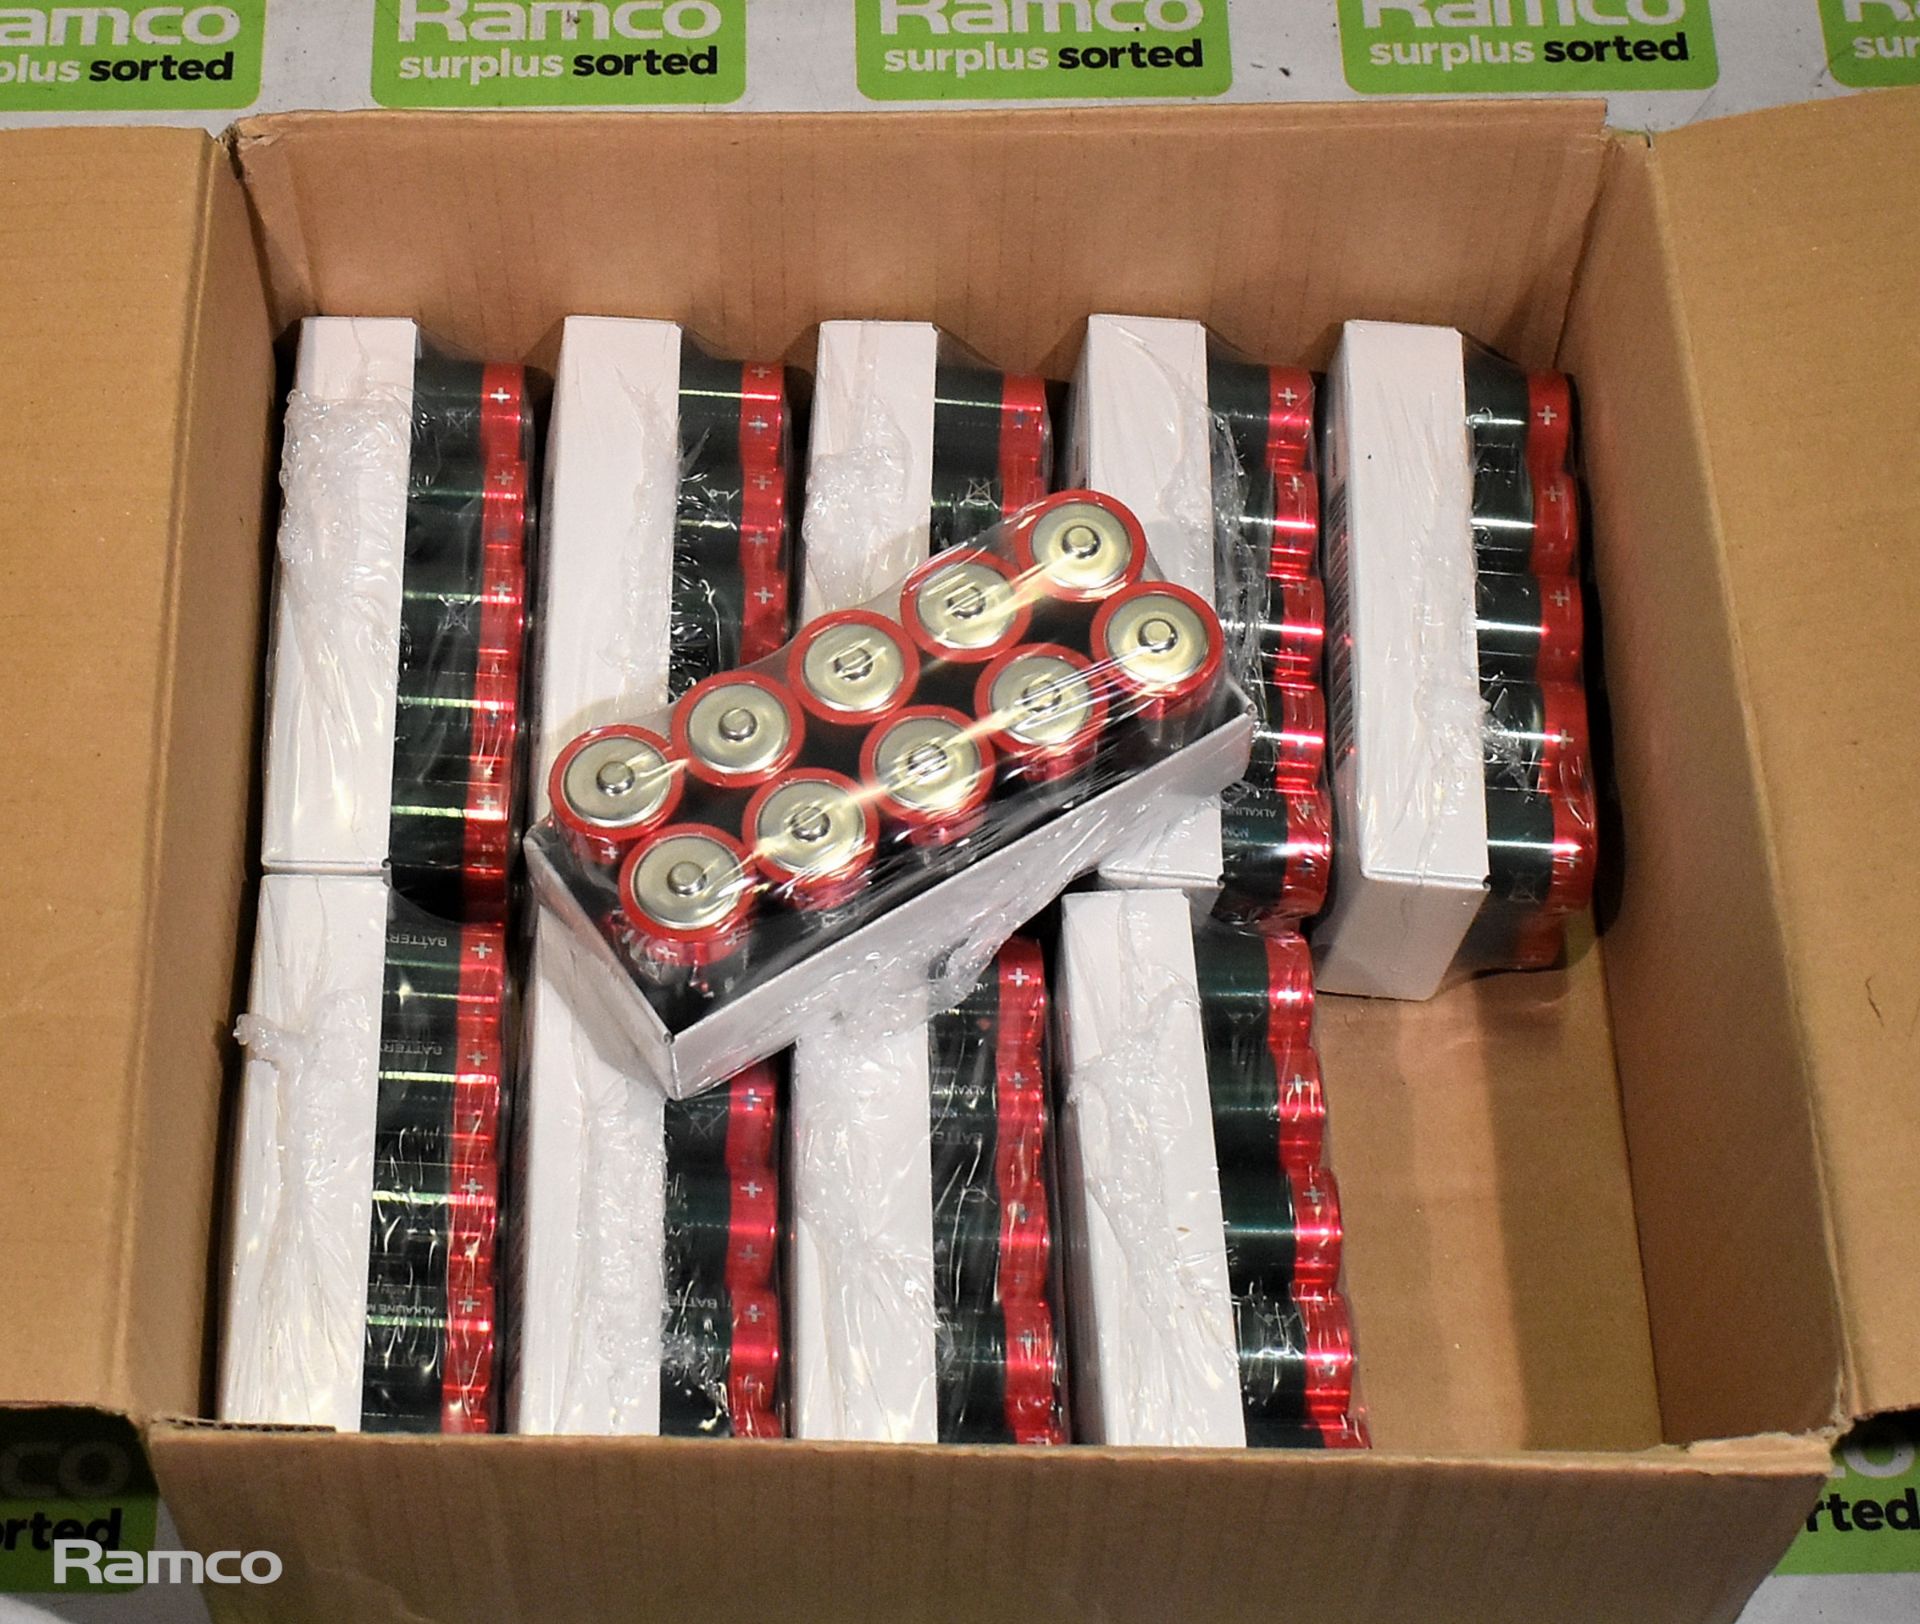 10x Packs of LR14 1.5V alkaline batteries - 10 batteries per pack